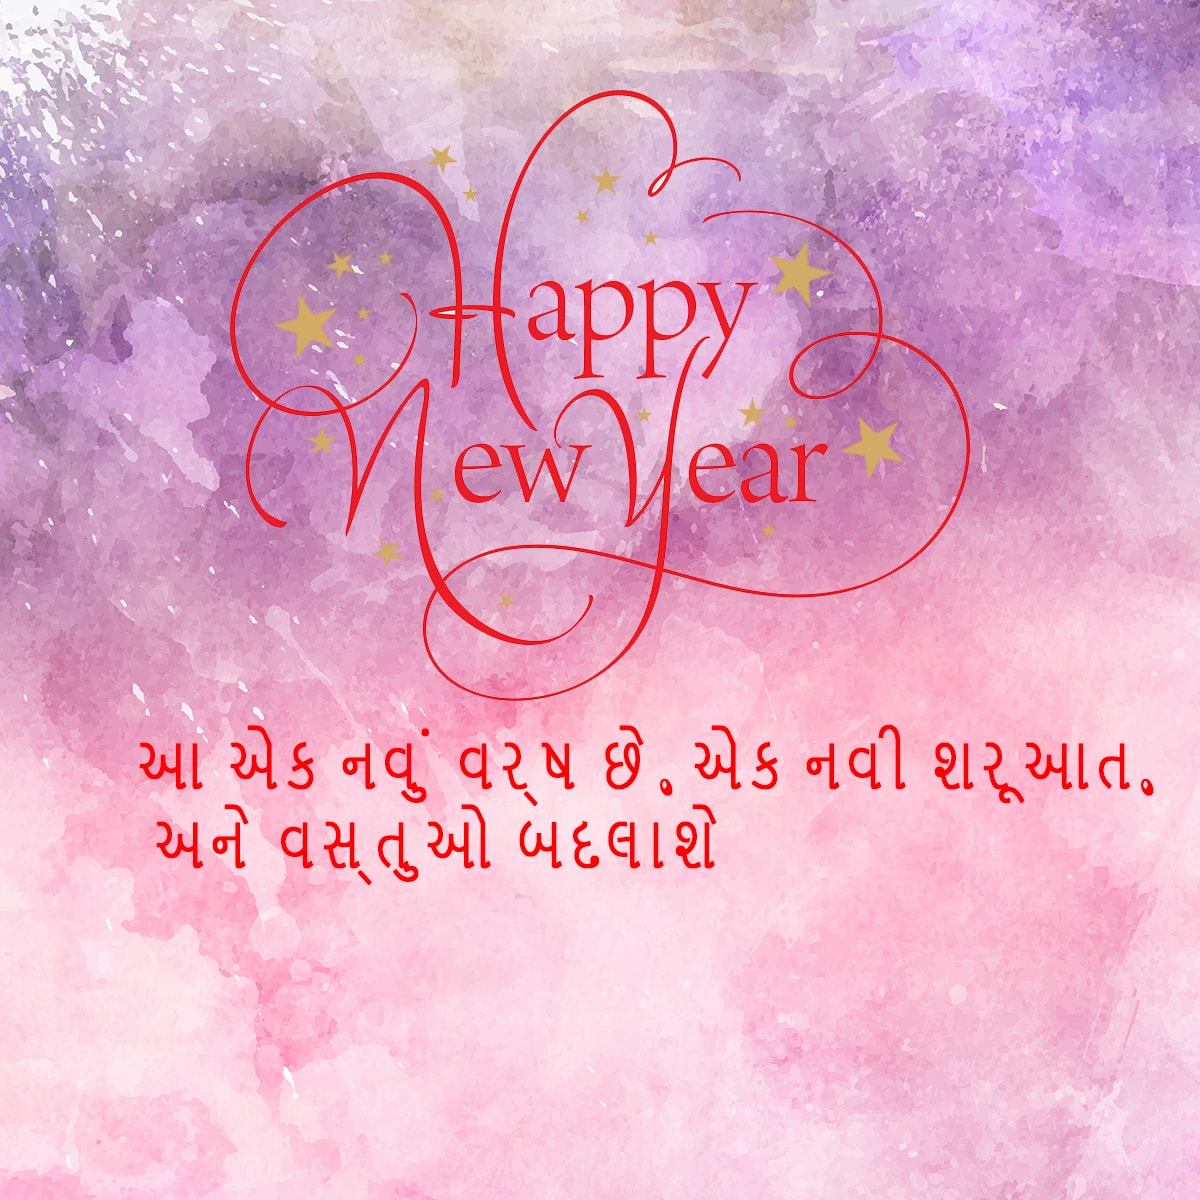 Happy New Year 2018 Wishes in Gujarati for Whatsapp